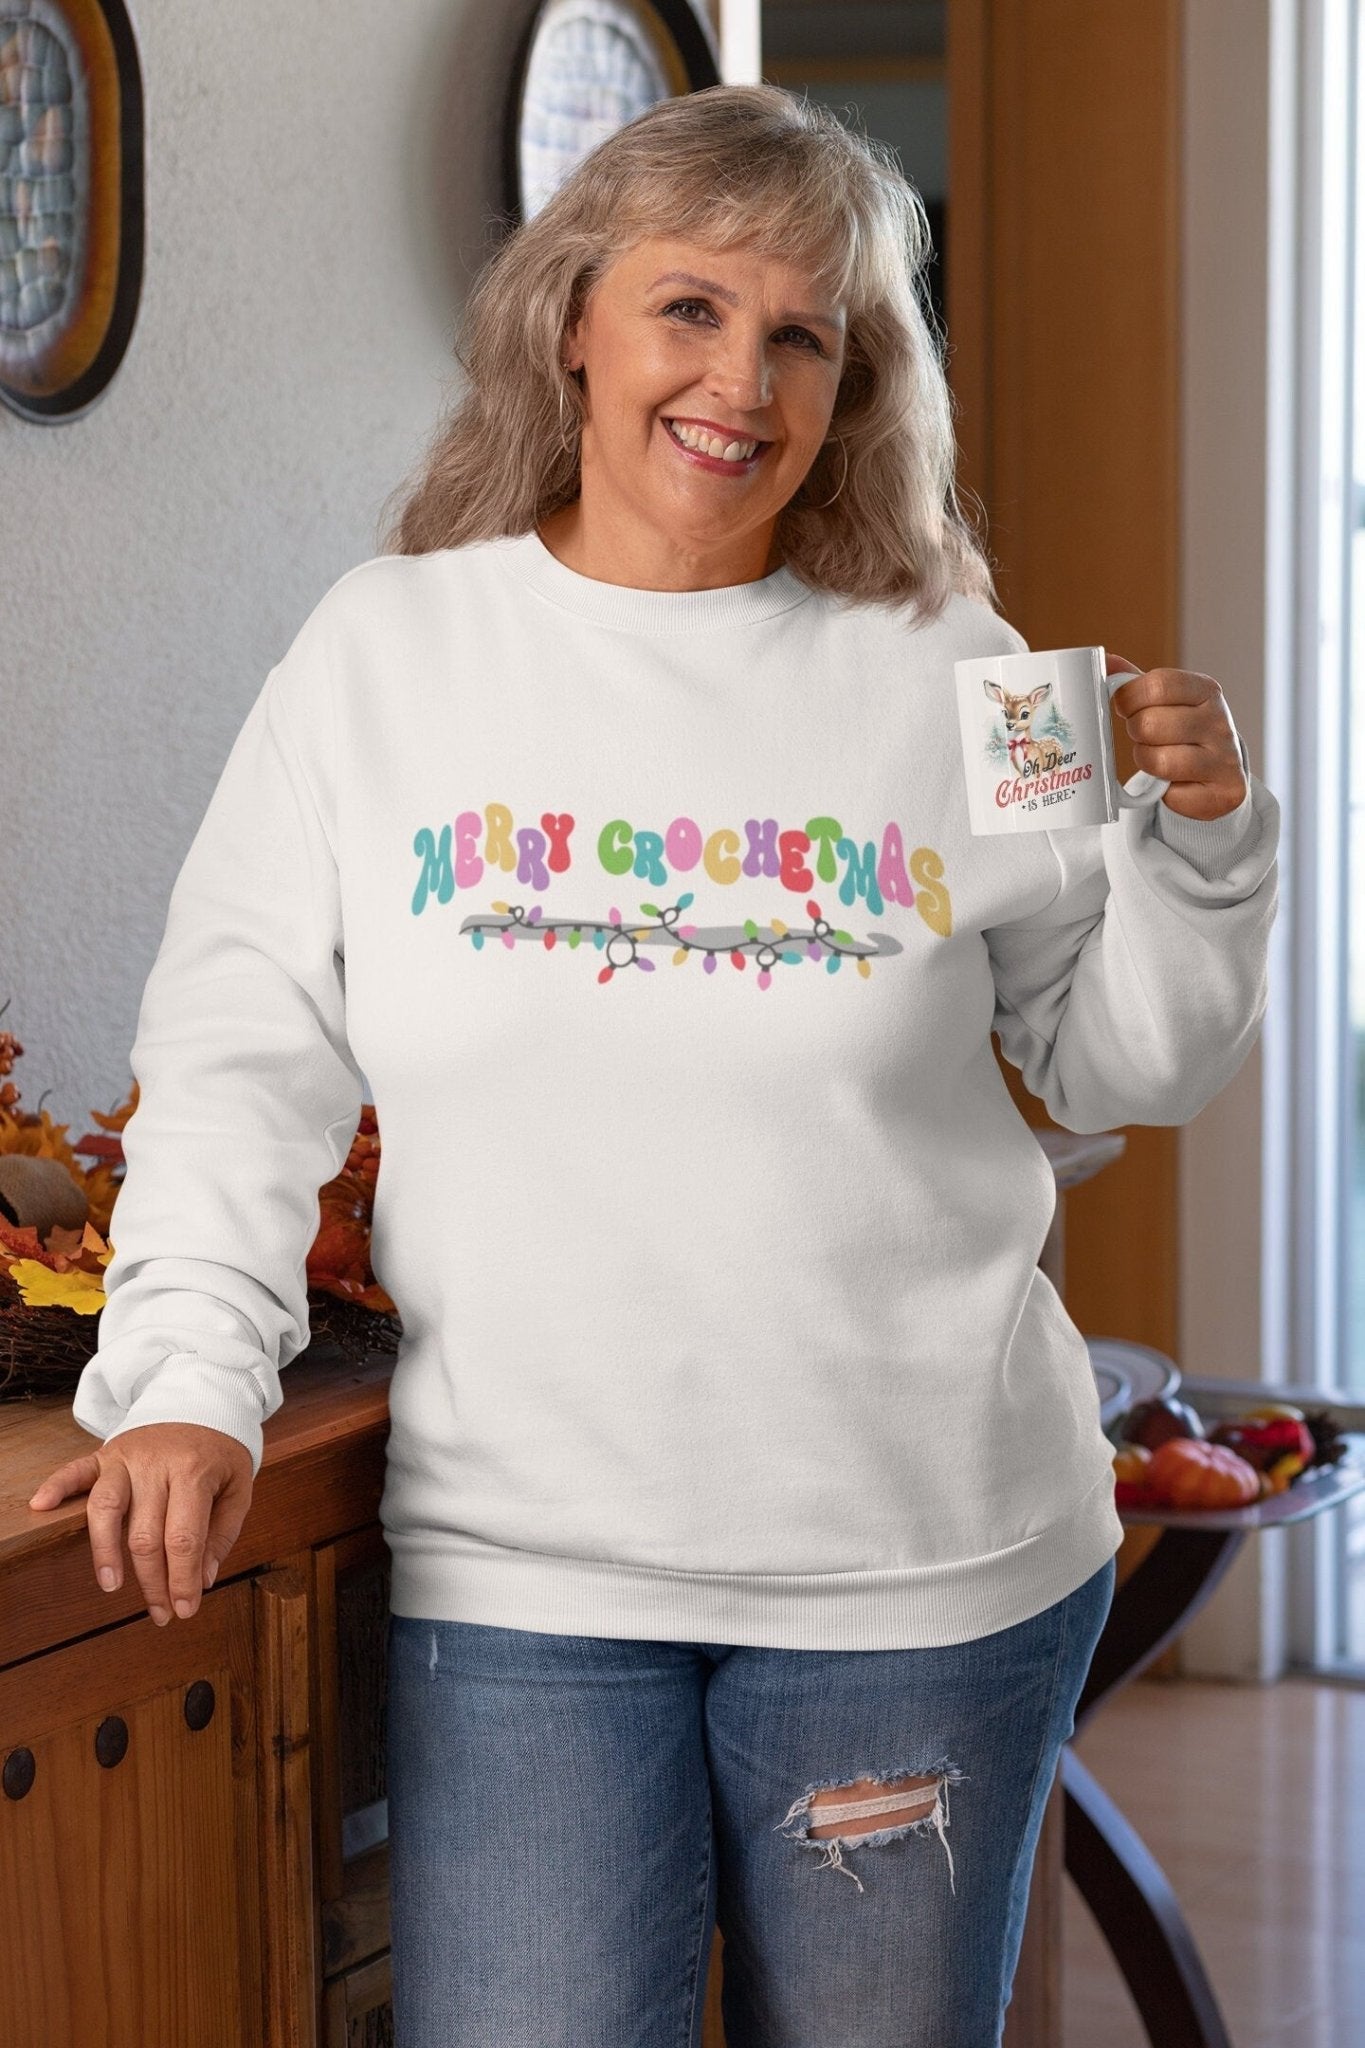 Funny Crochet T shirt Merry Crochetmas, Christmas Crochet gift for mom grandma aunt crocheter - SBS T Shop